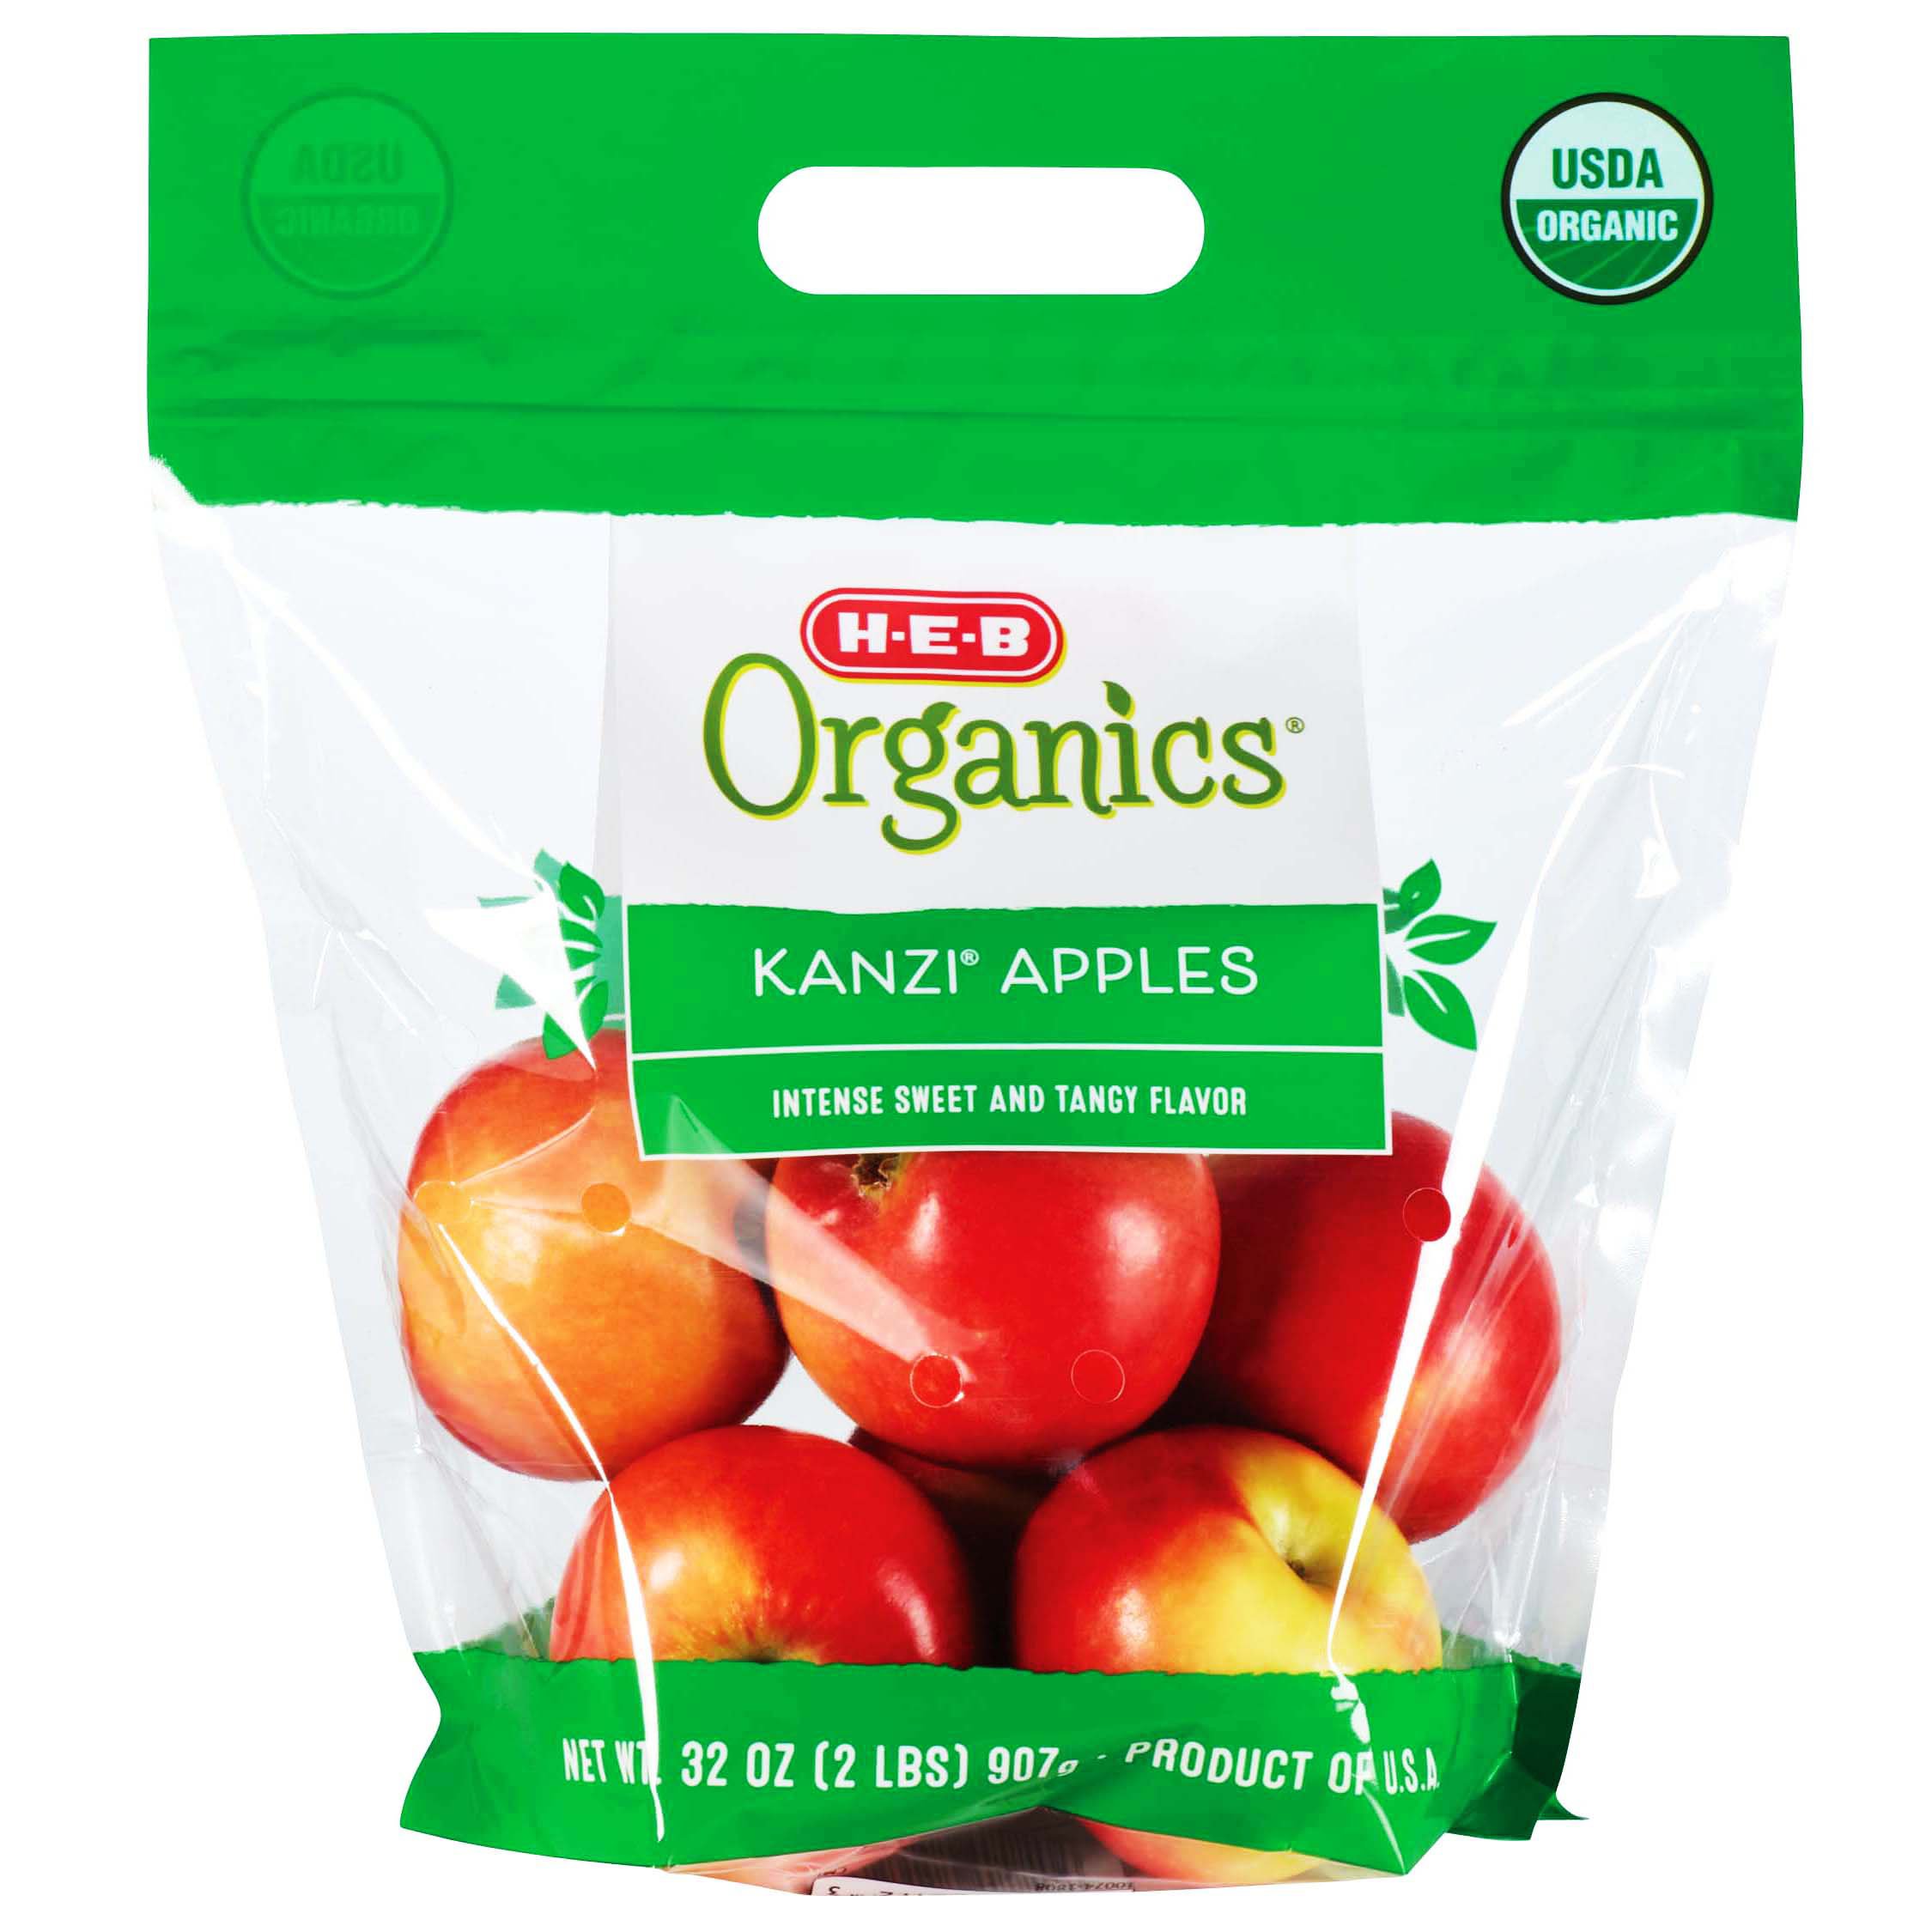 H-E-B Organics Fresh Kanzi Apples